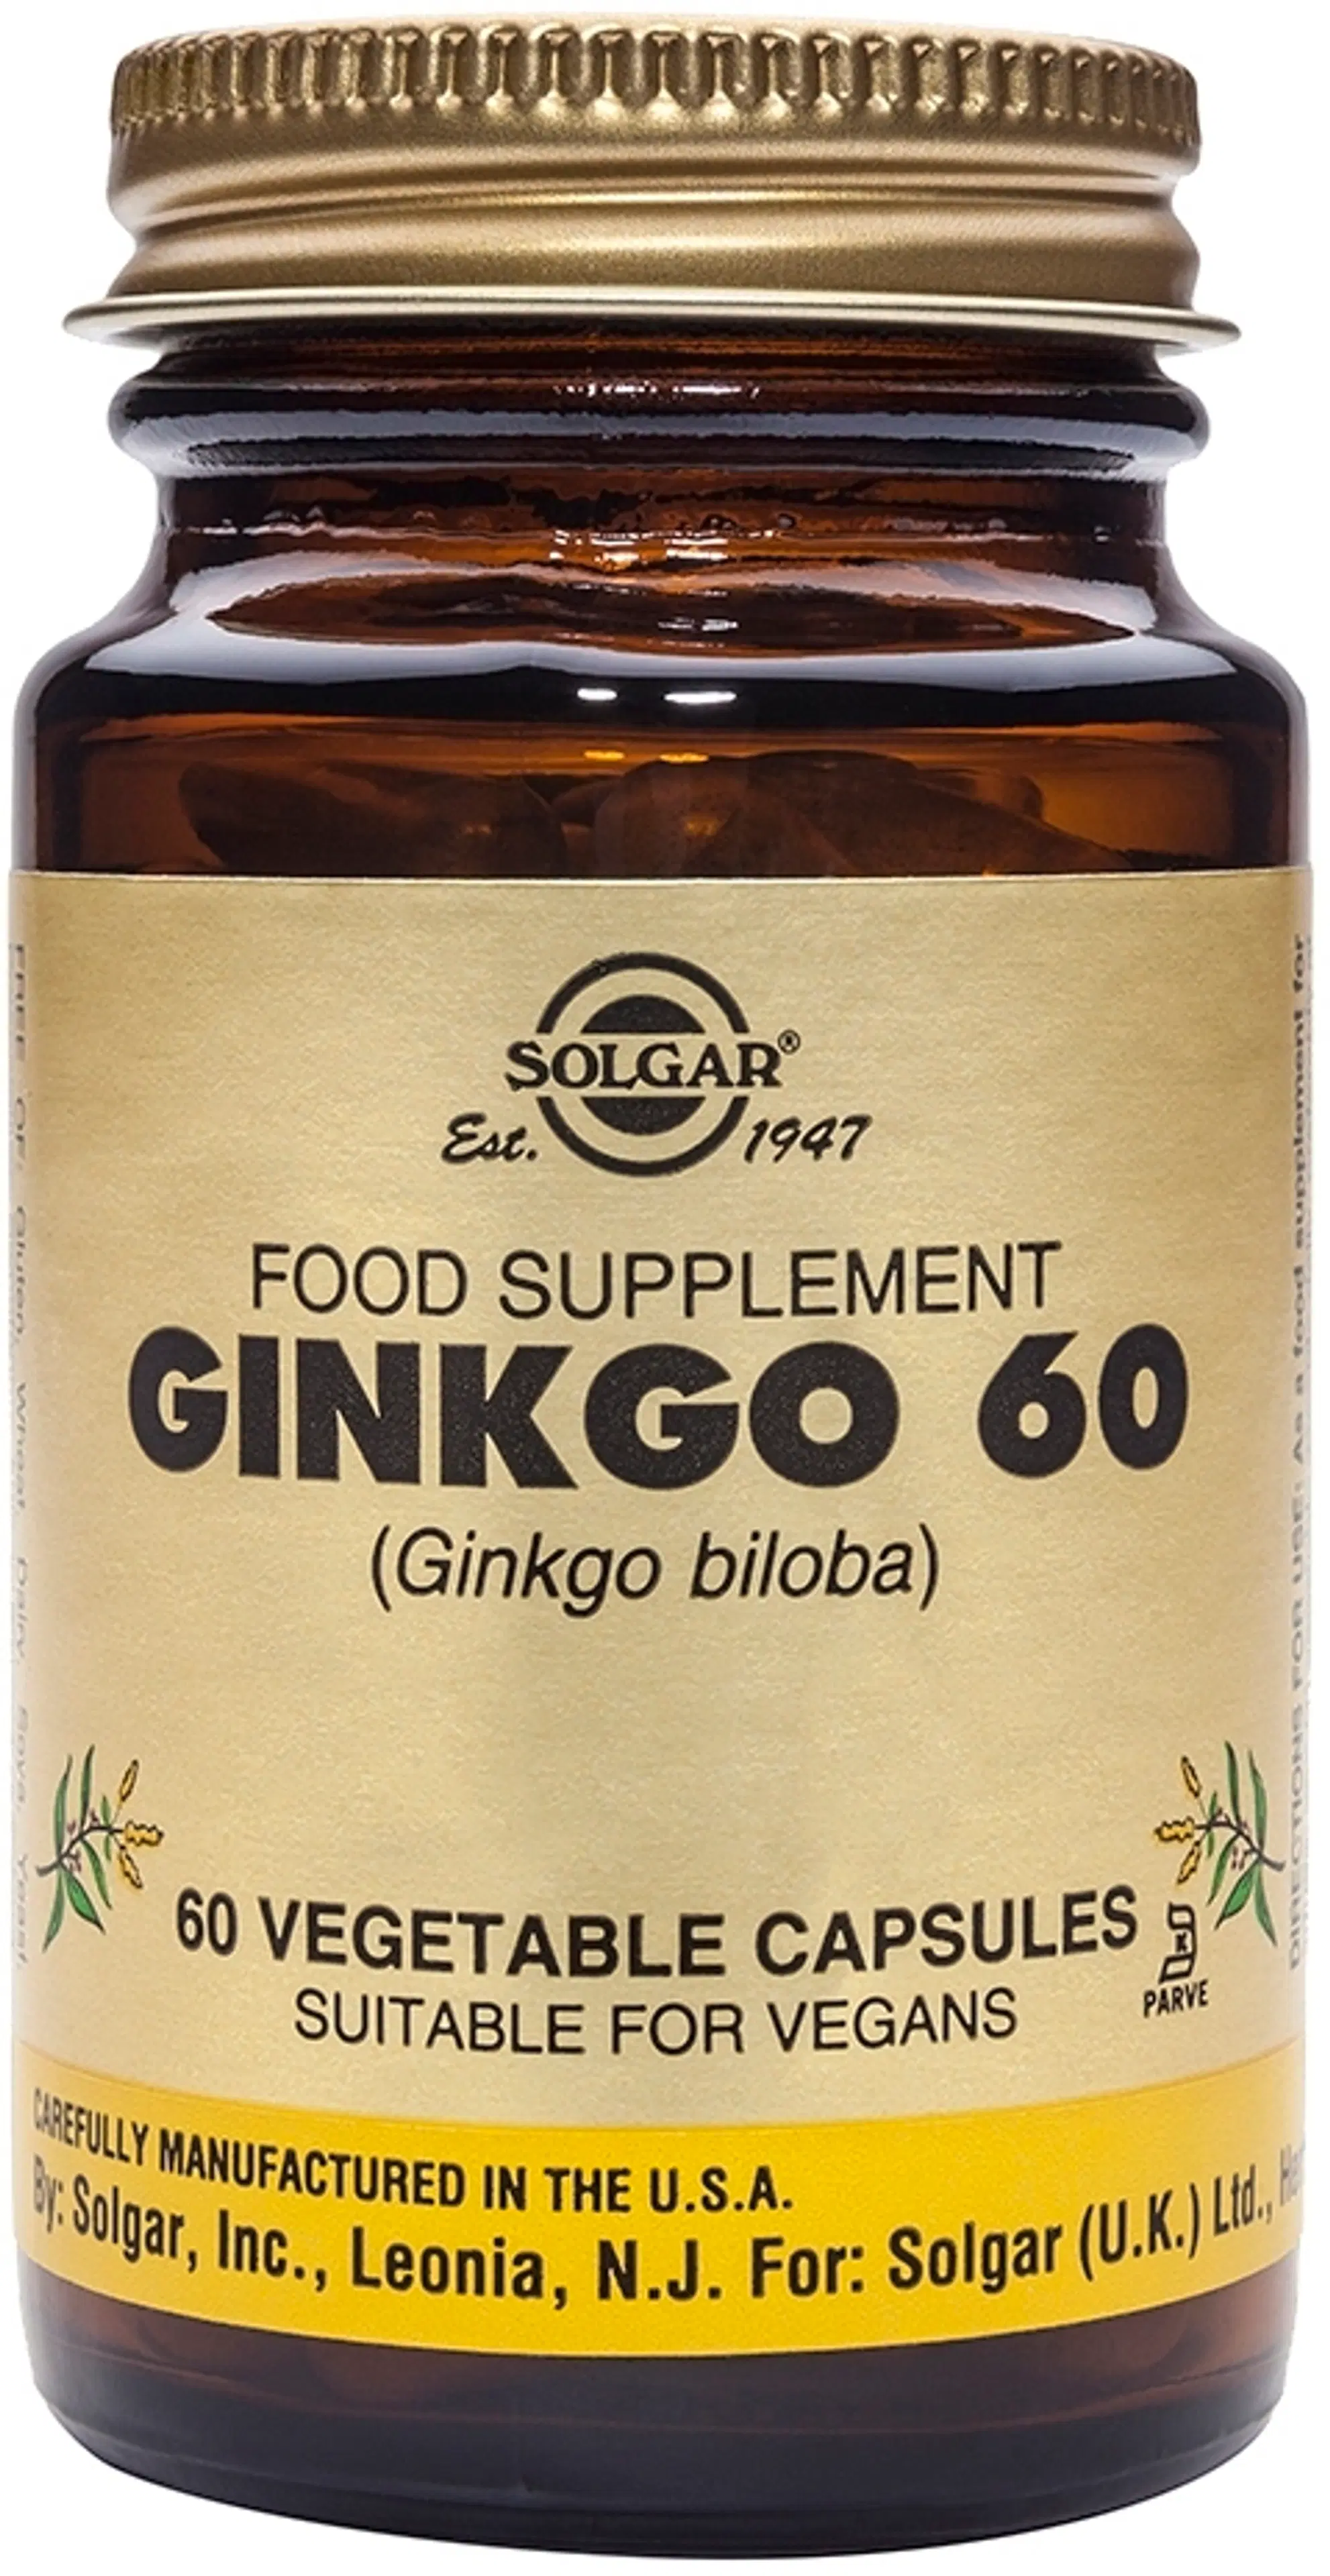 Solgar Ginkgo biloba Neidonhiuspuu 60 mg yrttivalmiste 60 kaps.